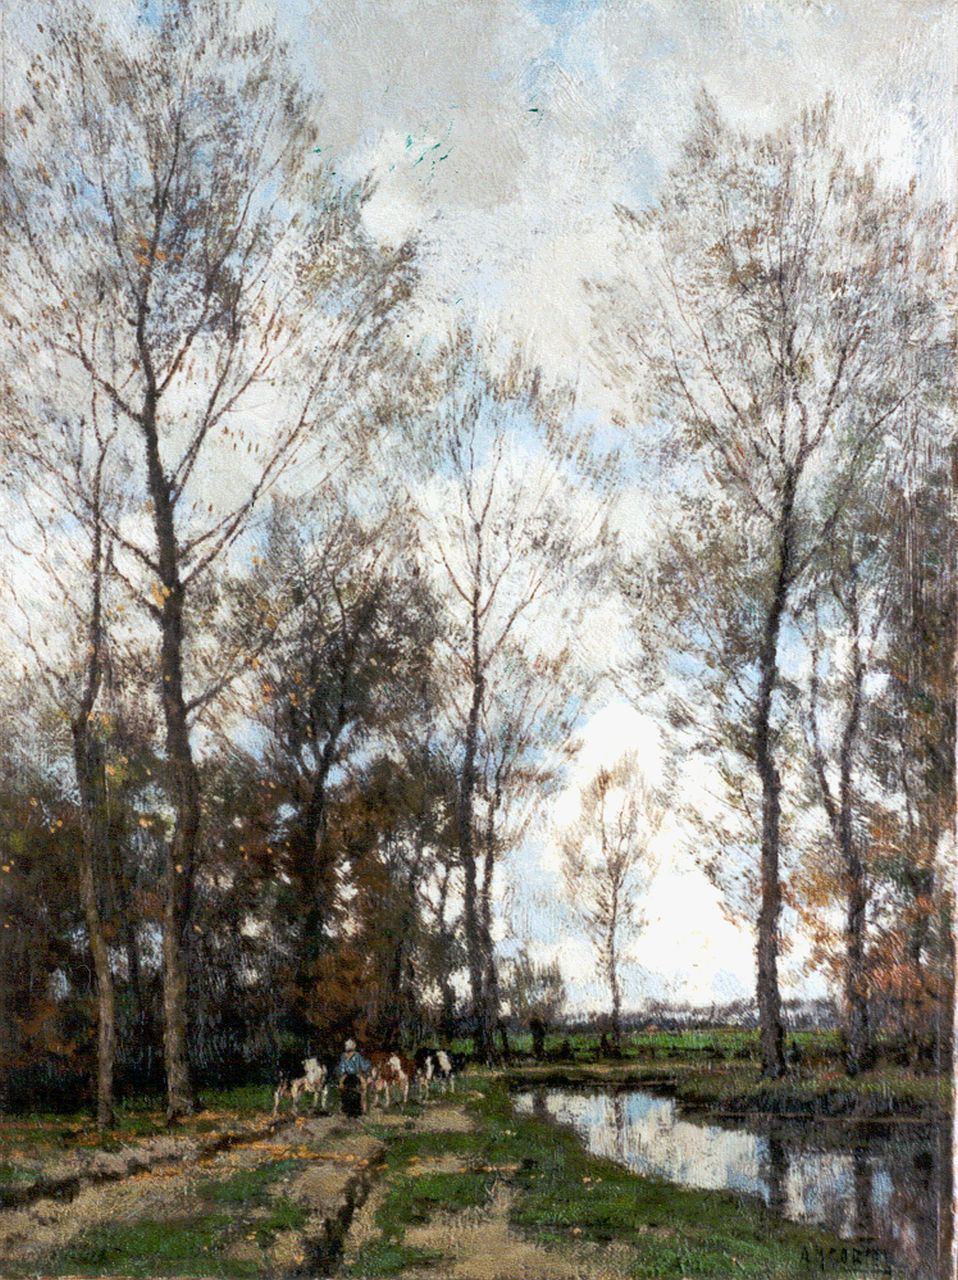 Gorter A.M.  | 'Arnold' Marc Gorter, Shepherdess with cattle in an autumn landscape, Öl auf Leinwand 50,8 x 37,8 cm, signed l.r.